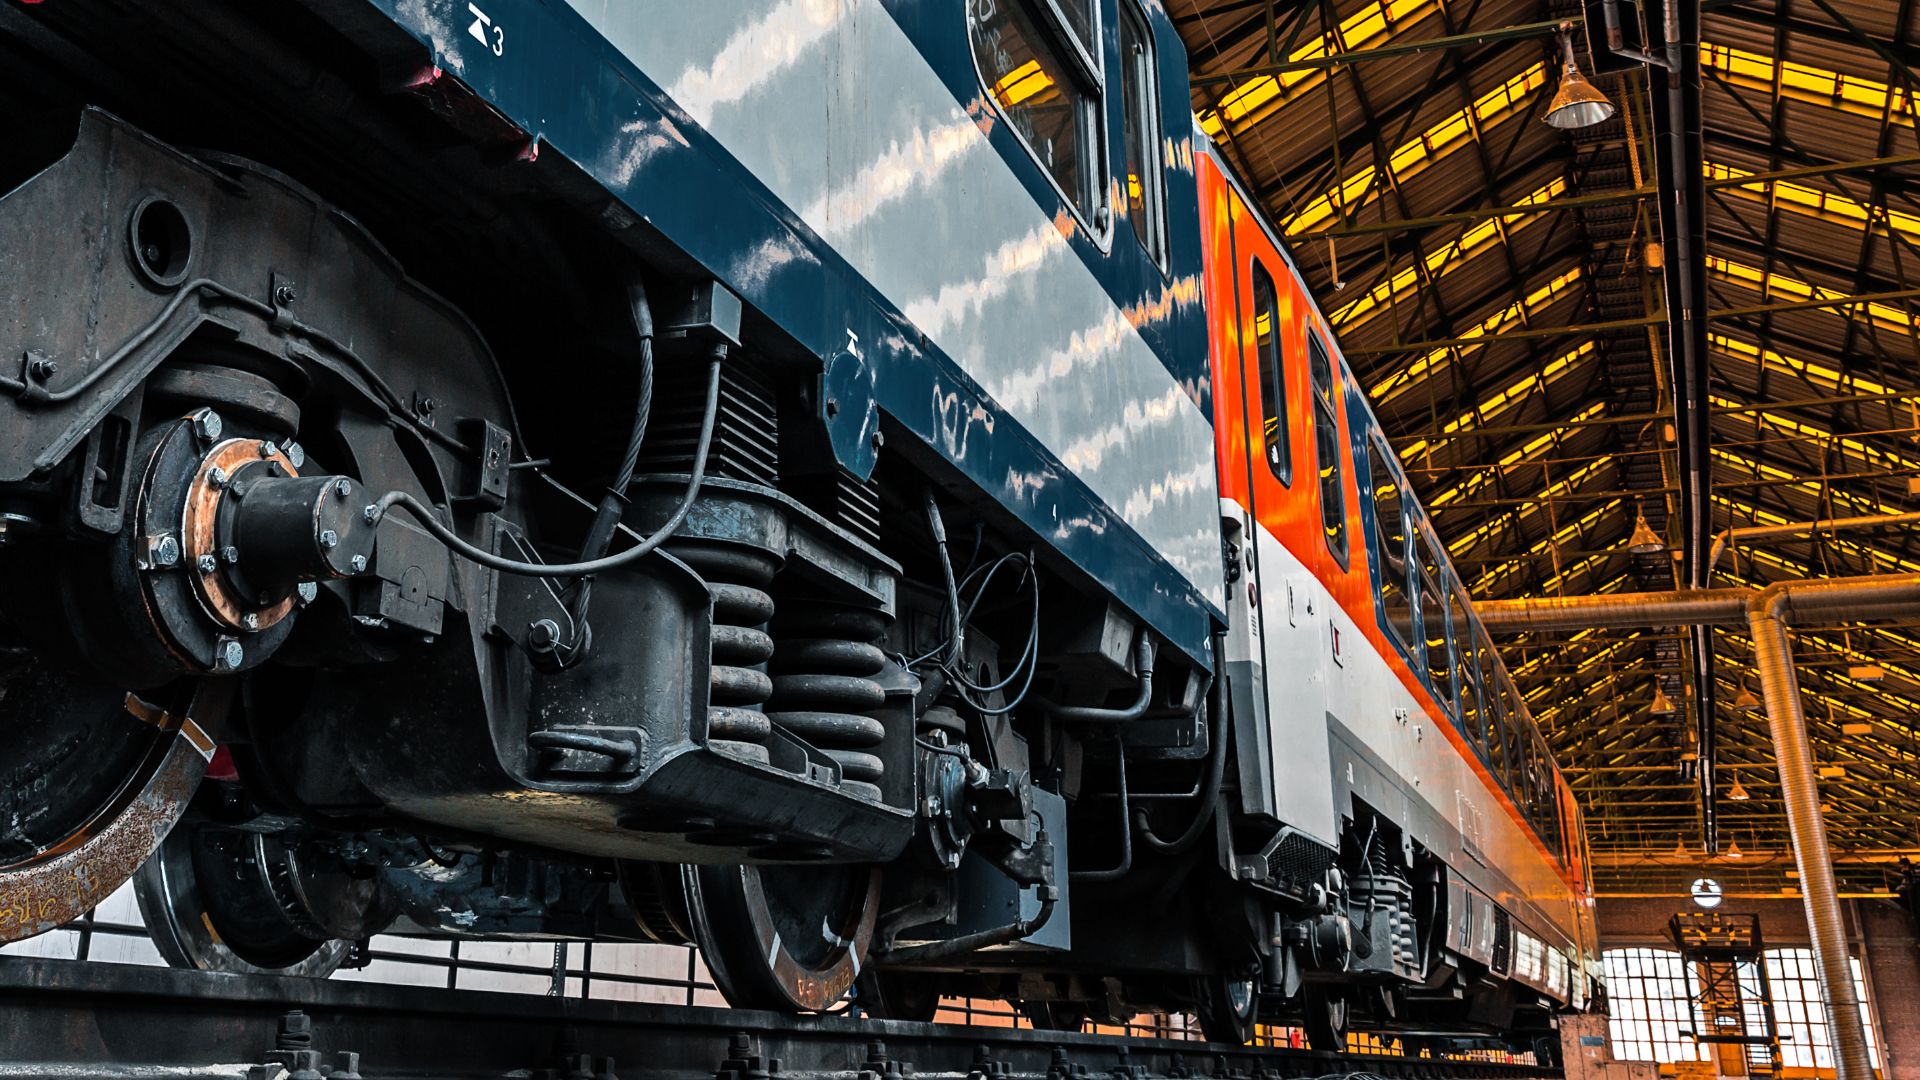 Cad Railway Industries Inc. has received strategic advisory